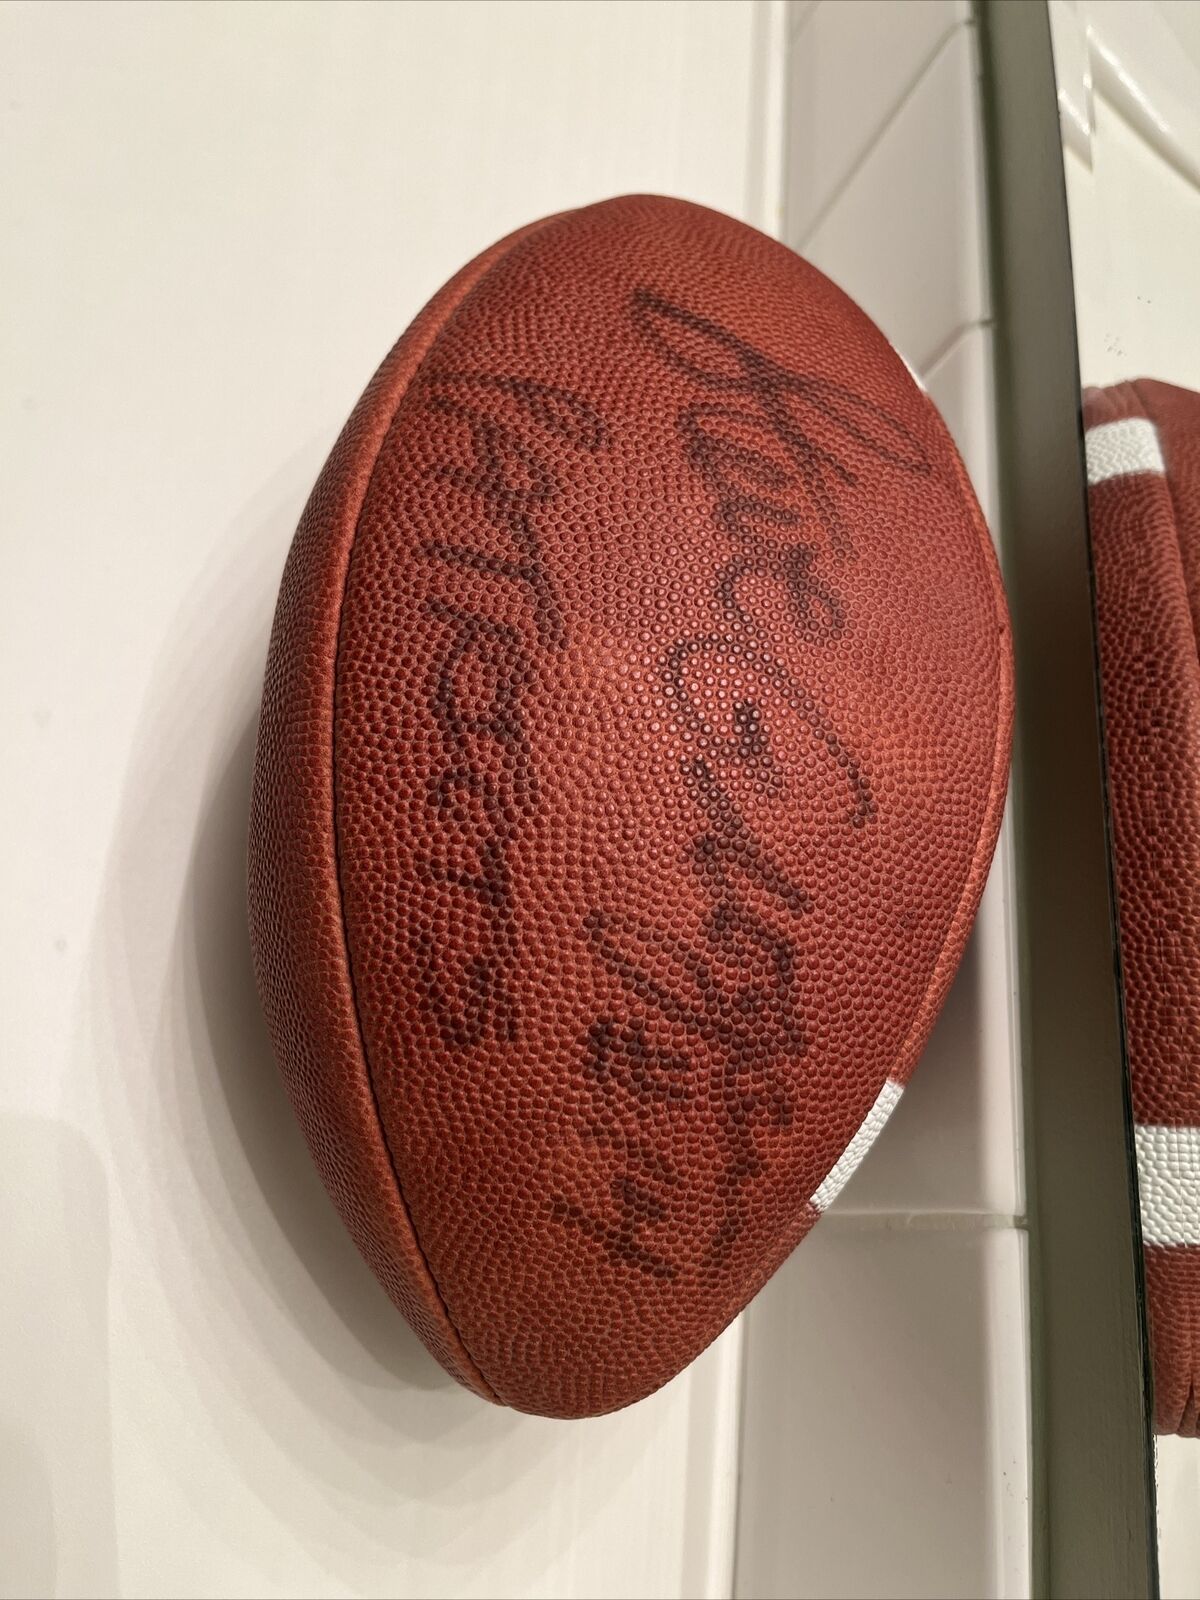 Steve Grogan Autograph Signed Football New England Patriots